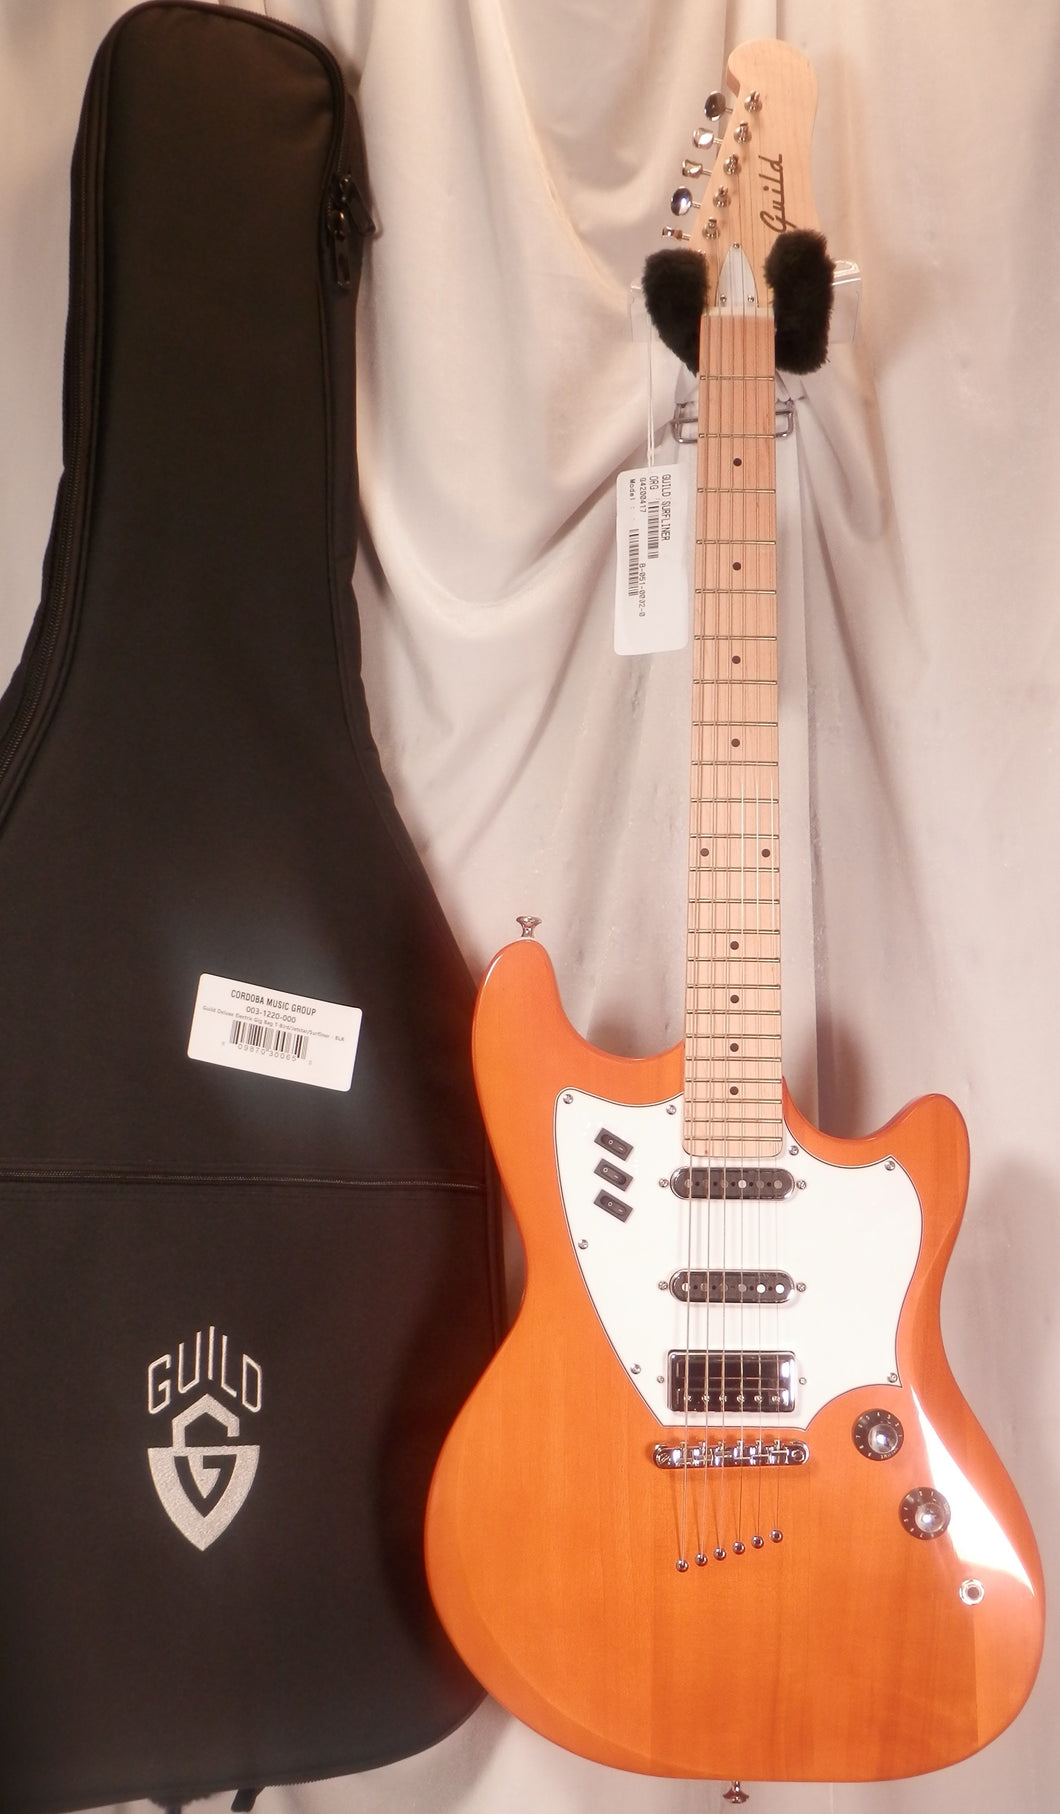 Guild Surfliner Sunset Orange Solid Body Electric Guitar with Deluxe Guild Gig Bag